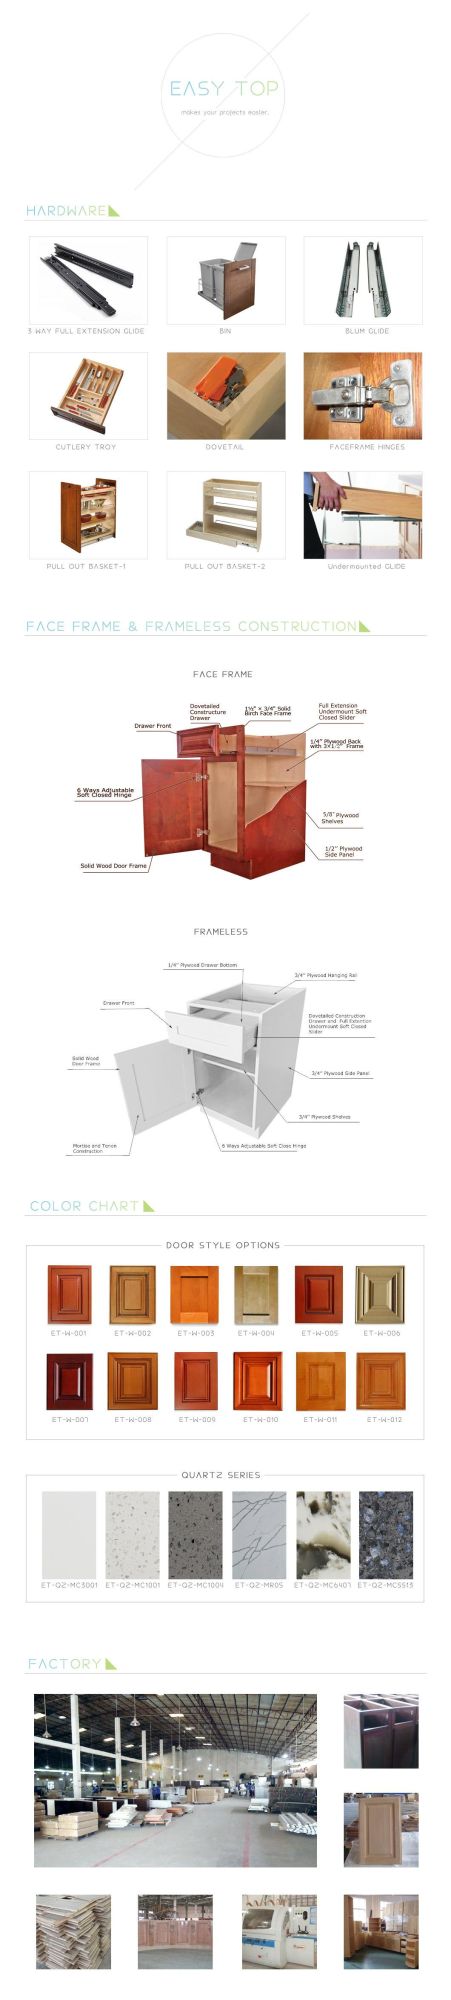 Villa Design Cupboard Solid Wood Home Furniture in Shaker Style Modular Kitchen Cabinet